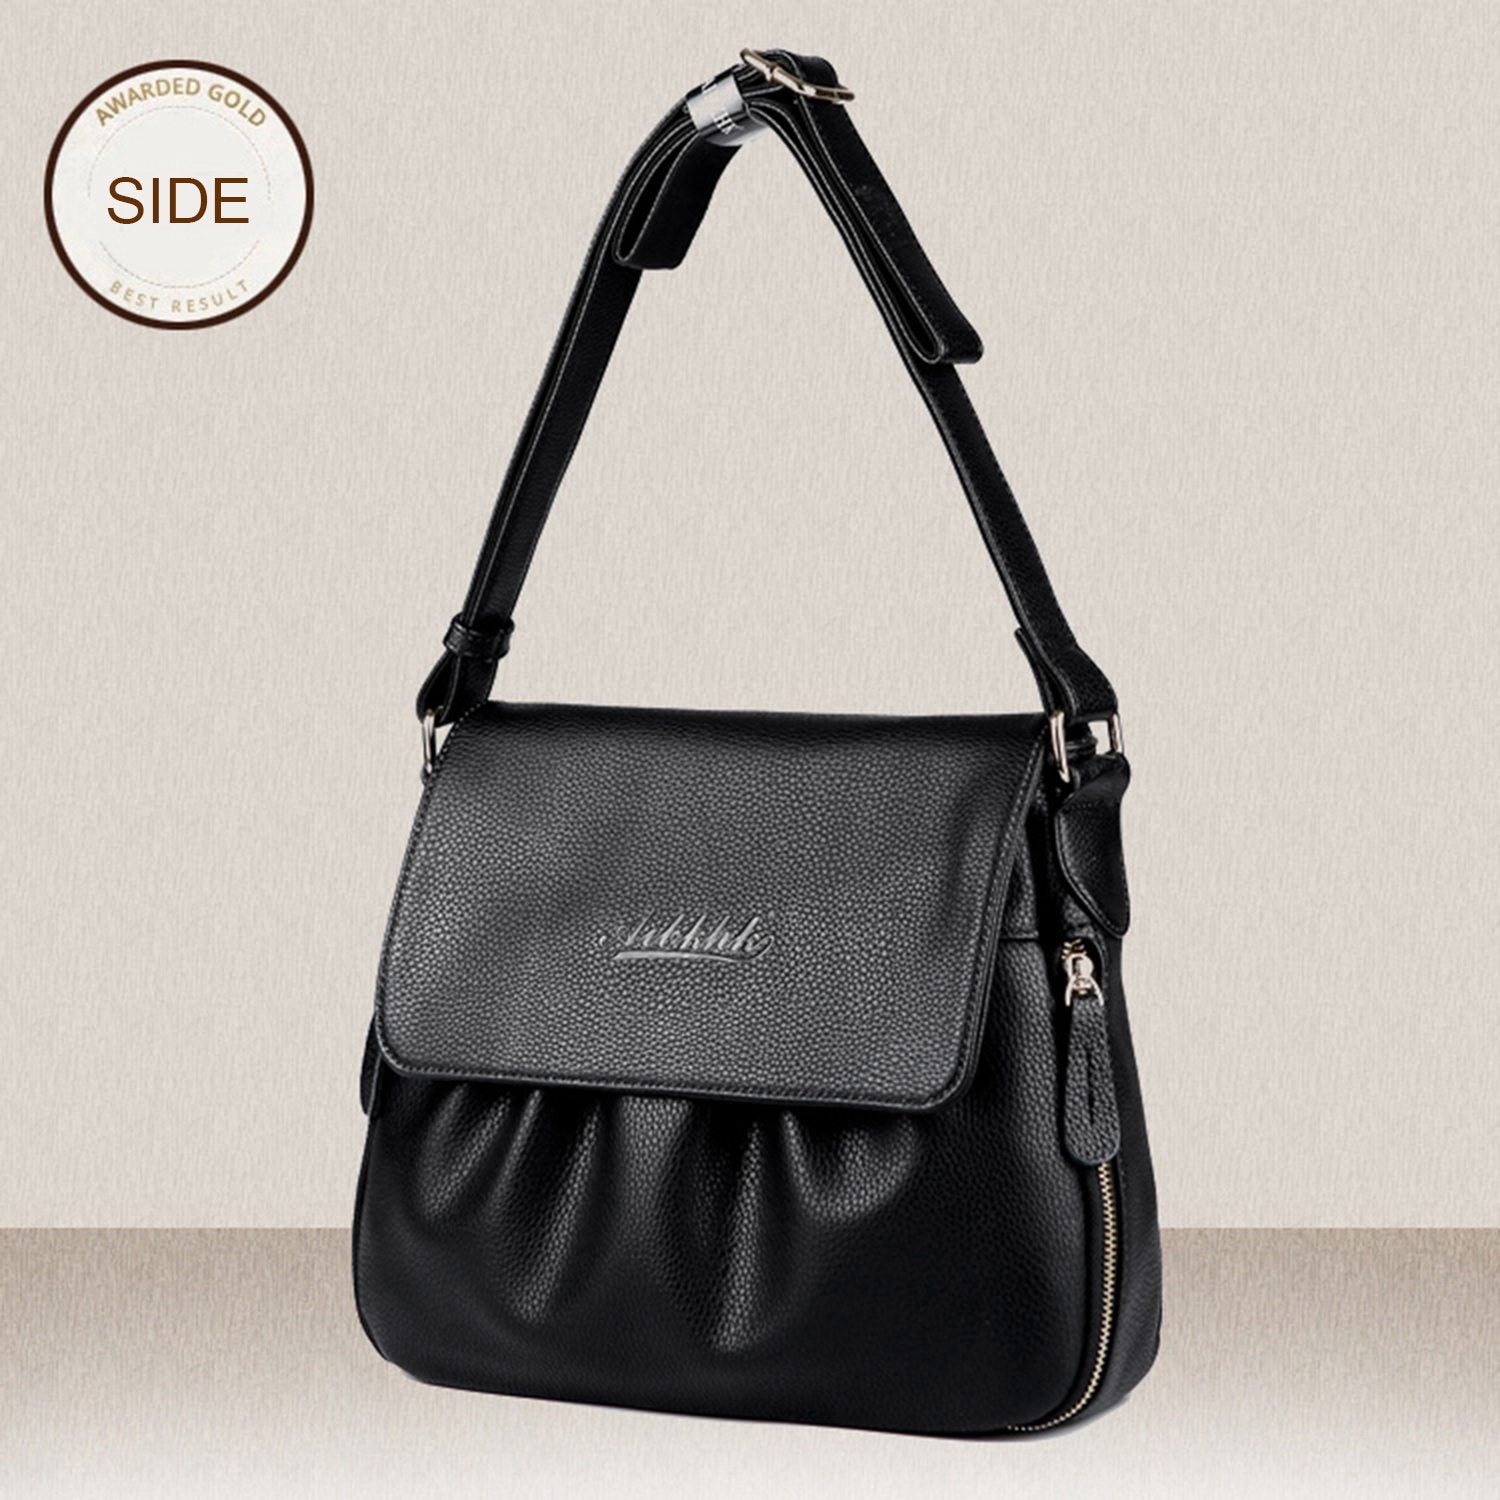 Aibkhk Leather Women'S Handbags Casual Female Shoulder Bags Women Messenger Crossbody Bag Travel Bag - ebowsos